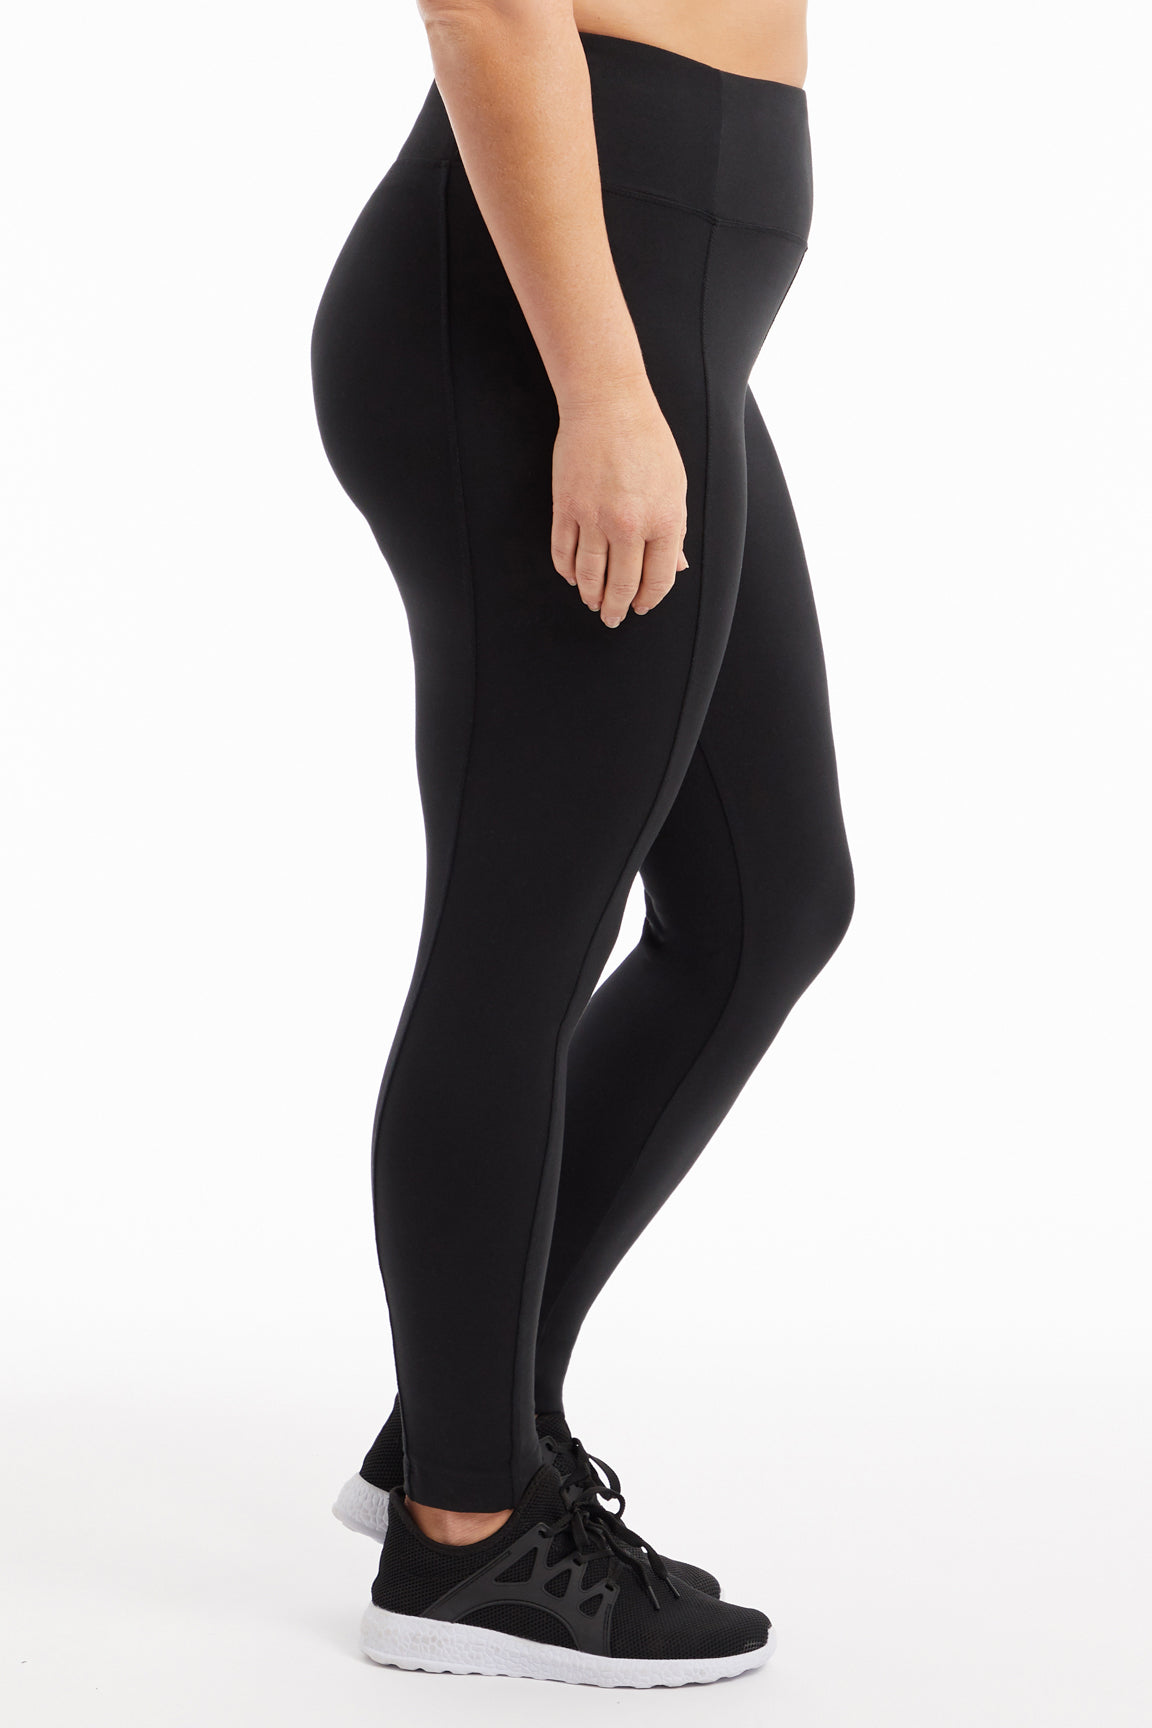 Womens Leggings Ladies LINED Black Tummy Control High Waist Size NEW Plain  LOT